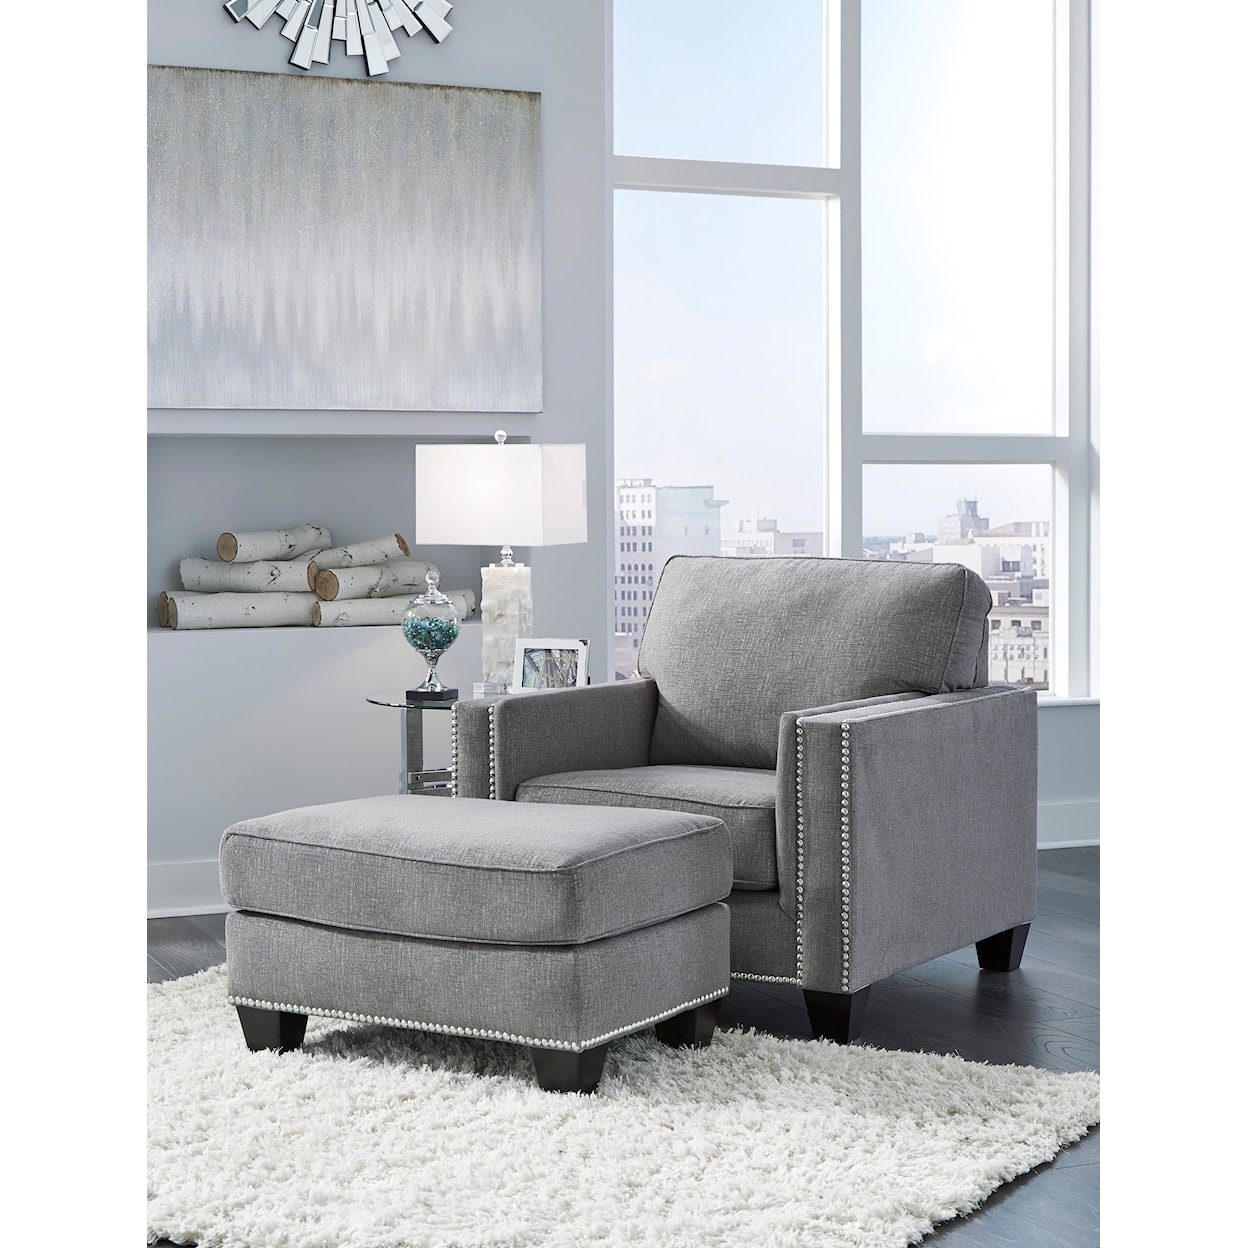 Ashley Furniture Signature Design Barrali Chair and Ottoman